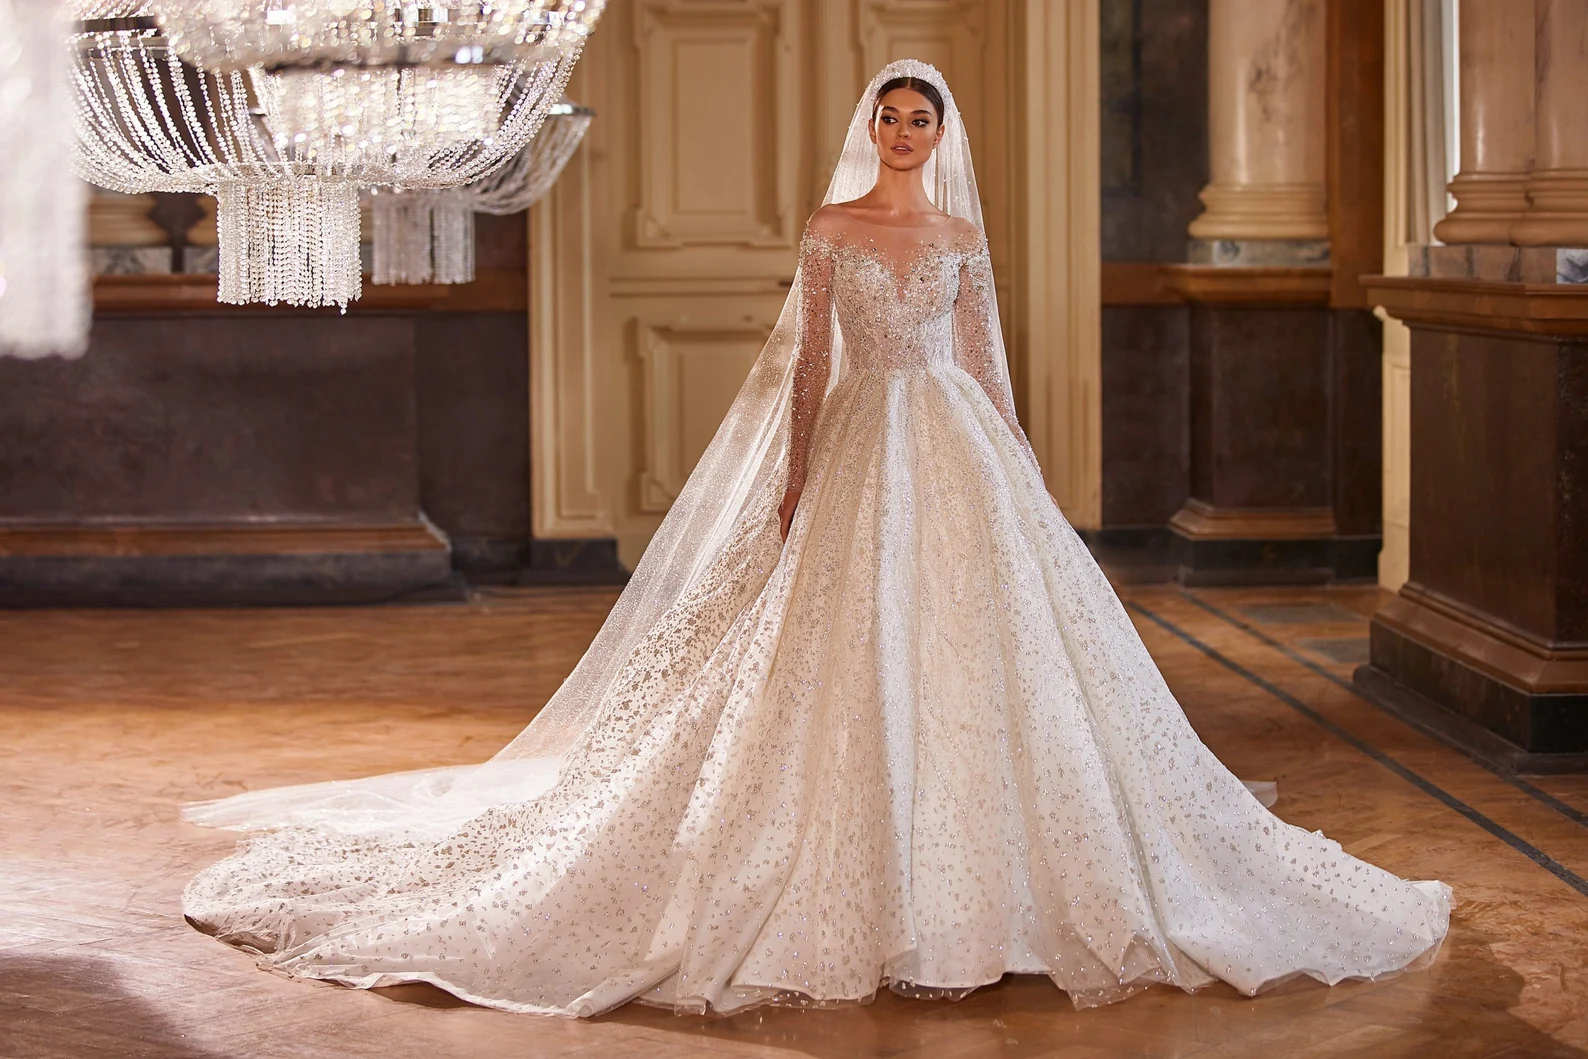 Fairytale weddings: Disney launches princess-inspired bridal dresses